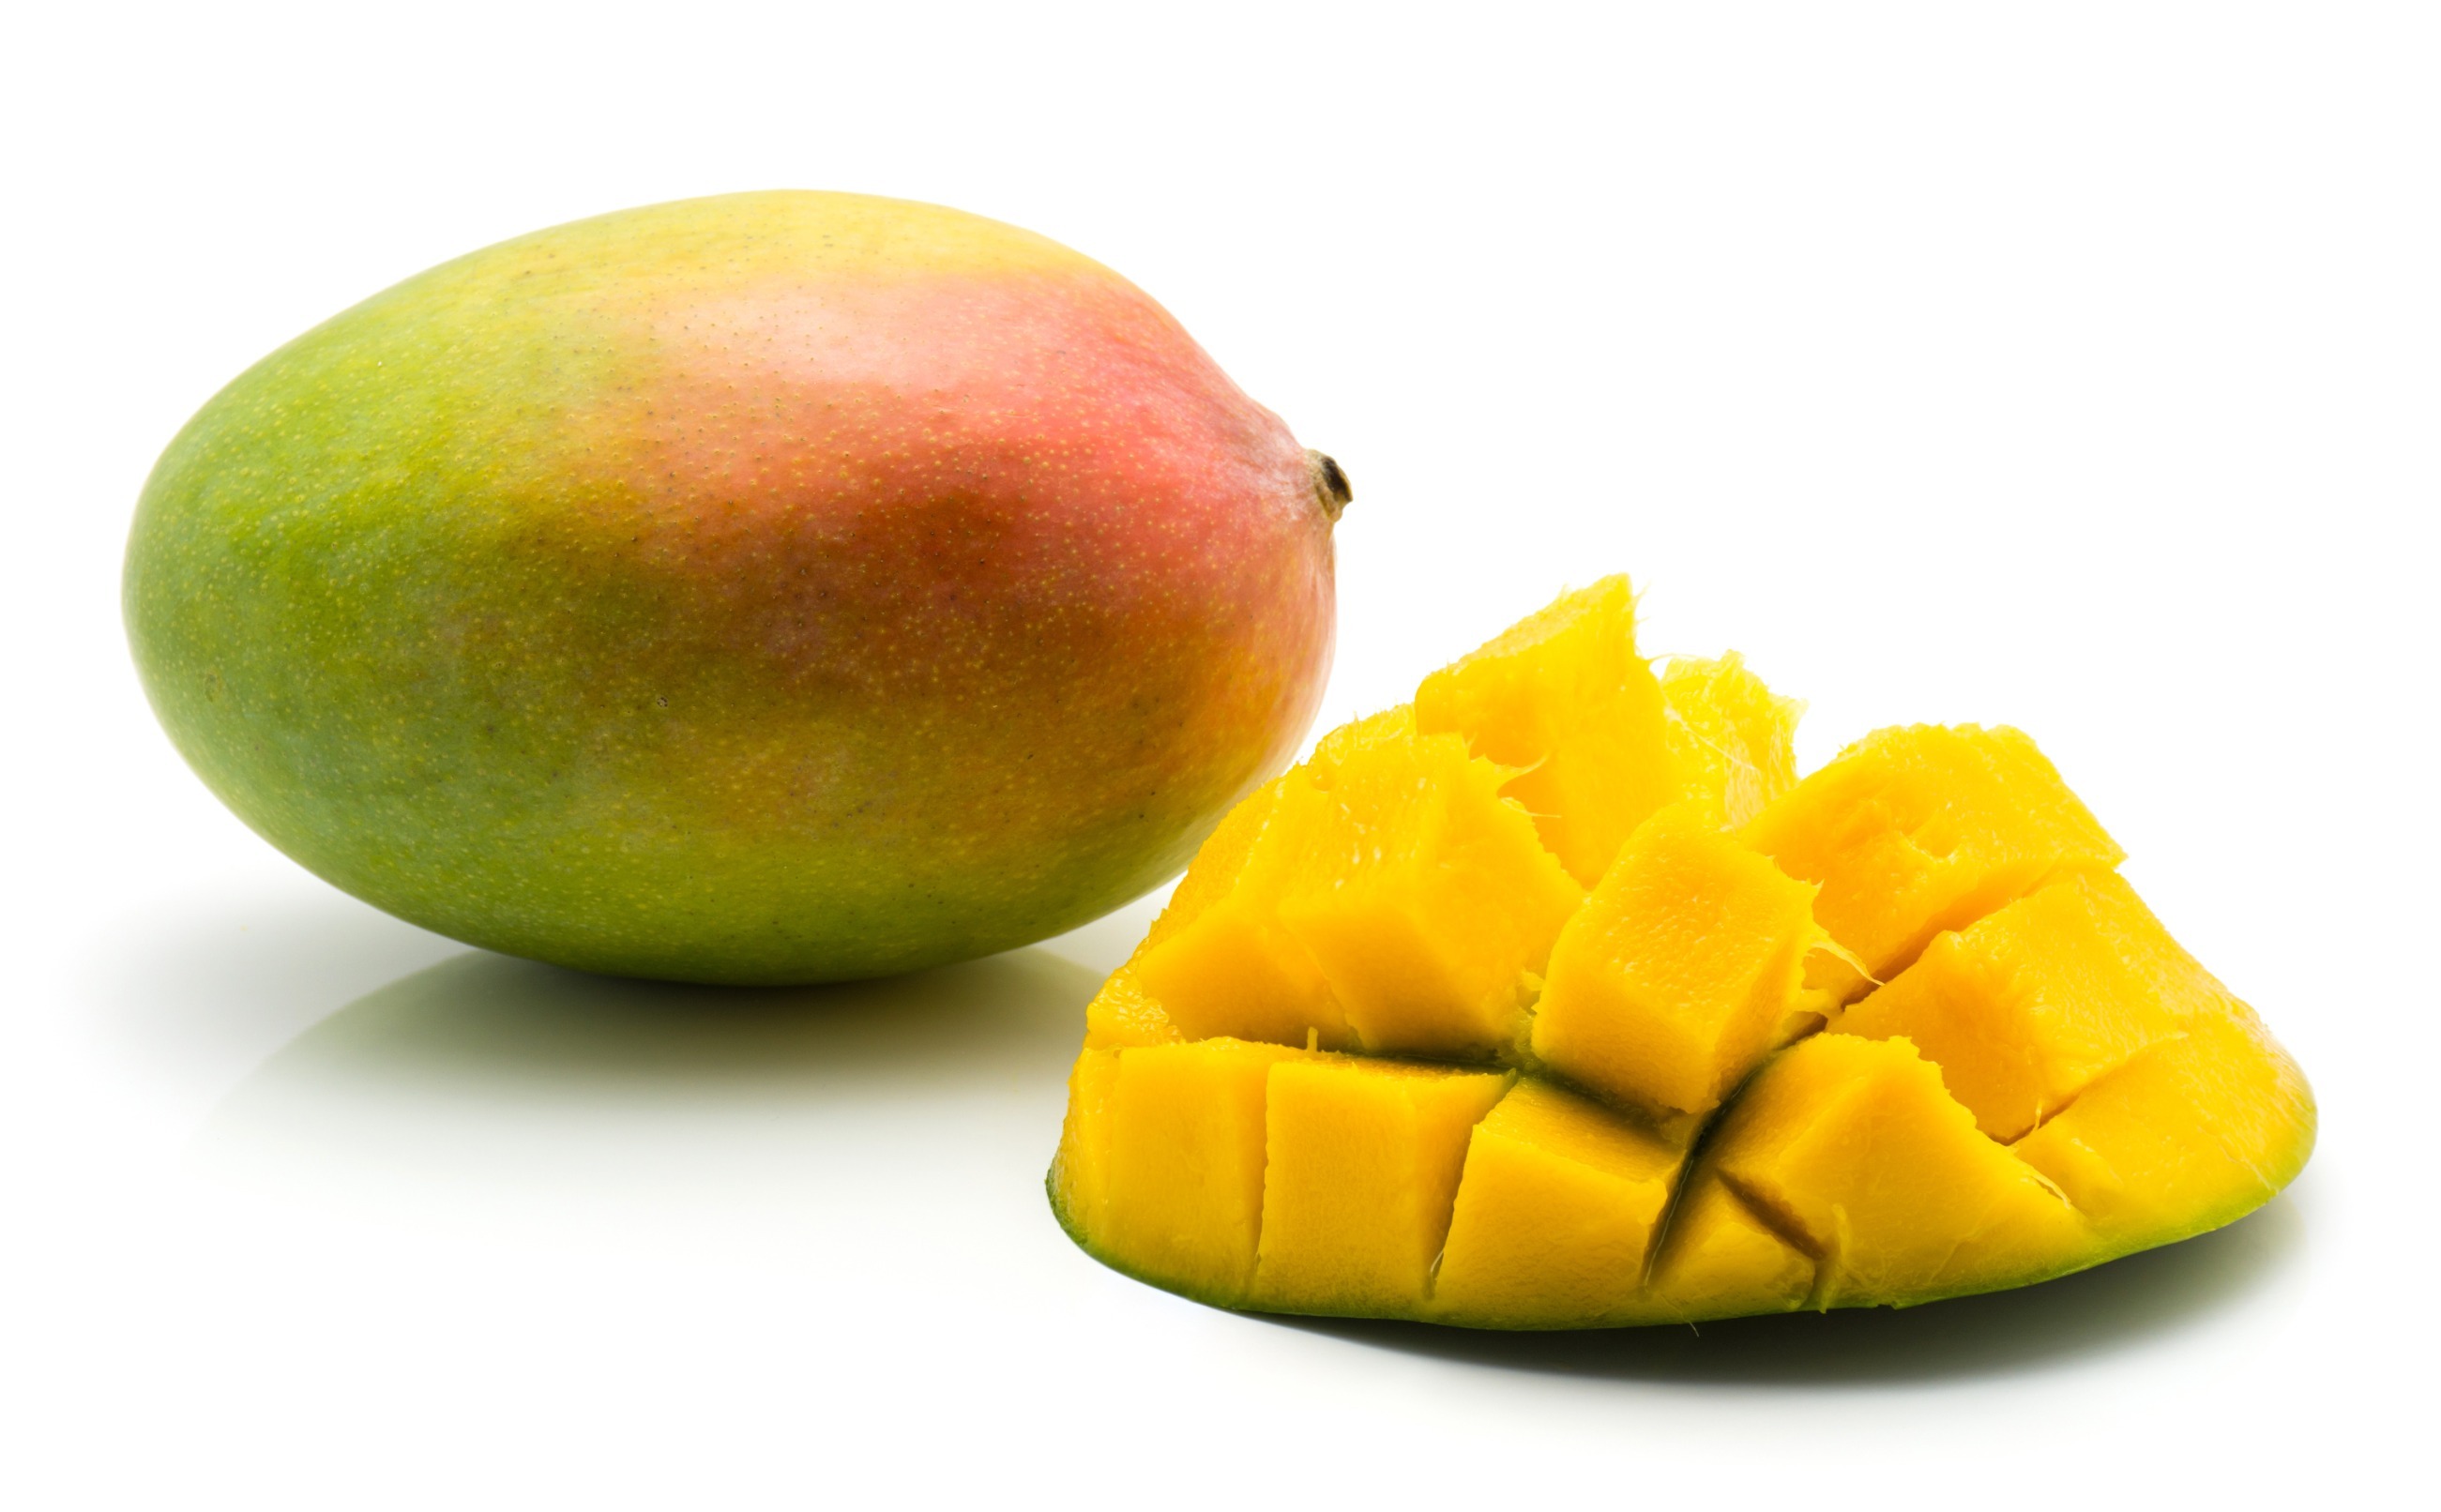 mango, mango hedgehog, the seed produces mango kernel fat.